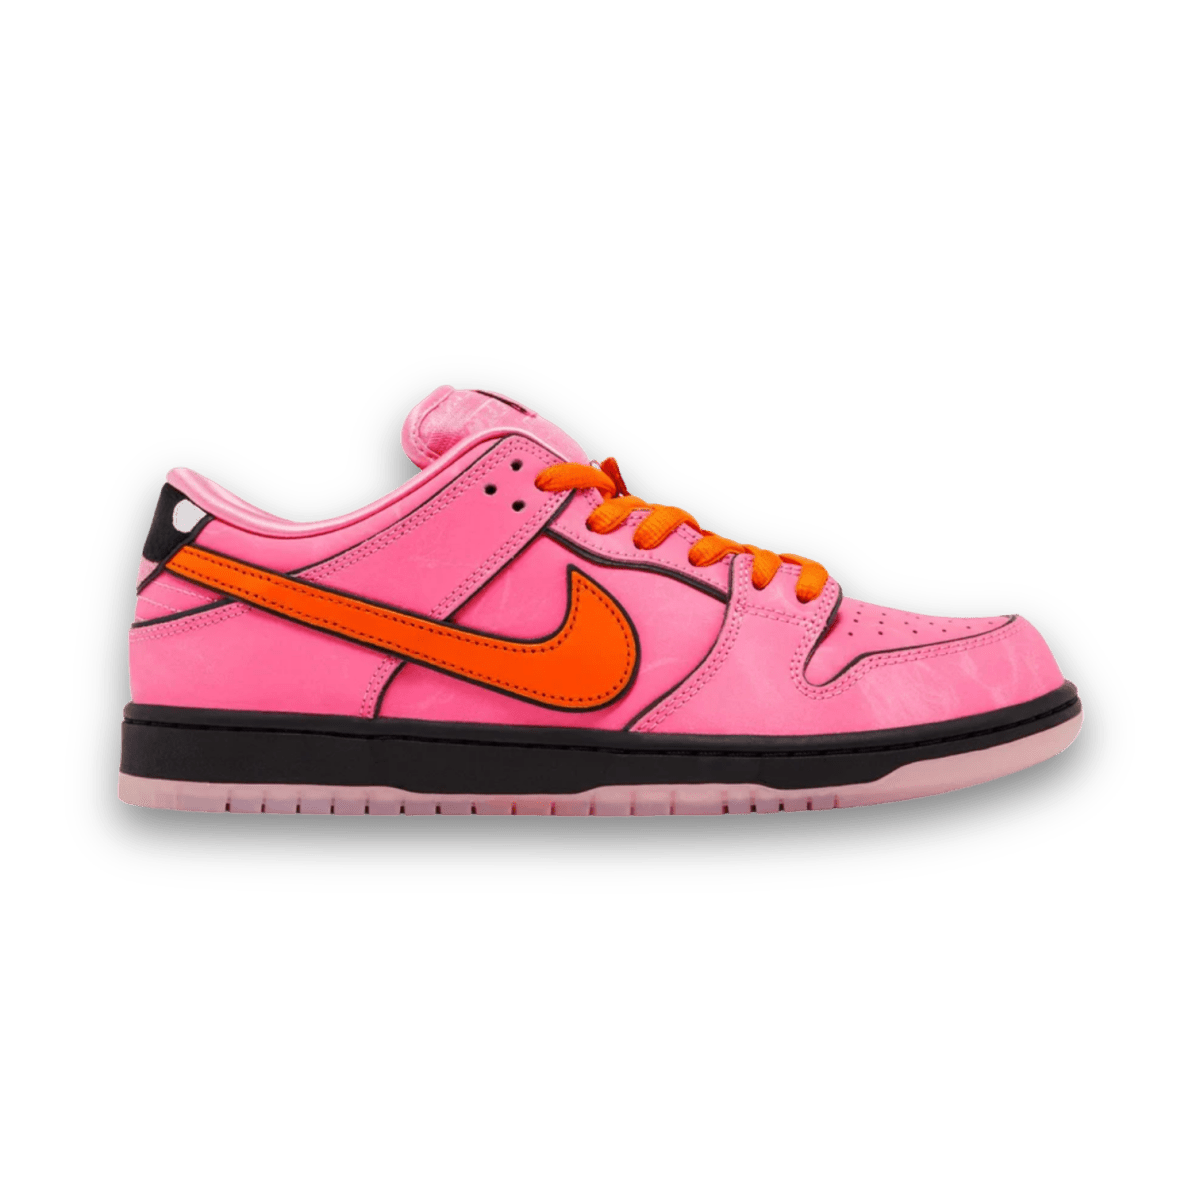 The Powerpuff Girls x Dunk Low Pro SB Dunk QS 'Blossom' Pink - Low Sneaker - Jawns on Fire Sneakers & Streetwear